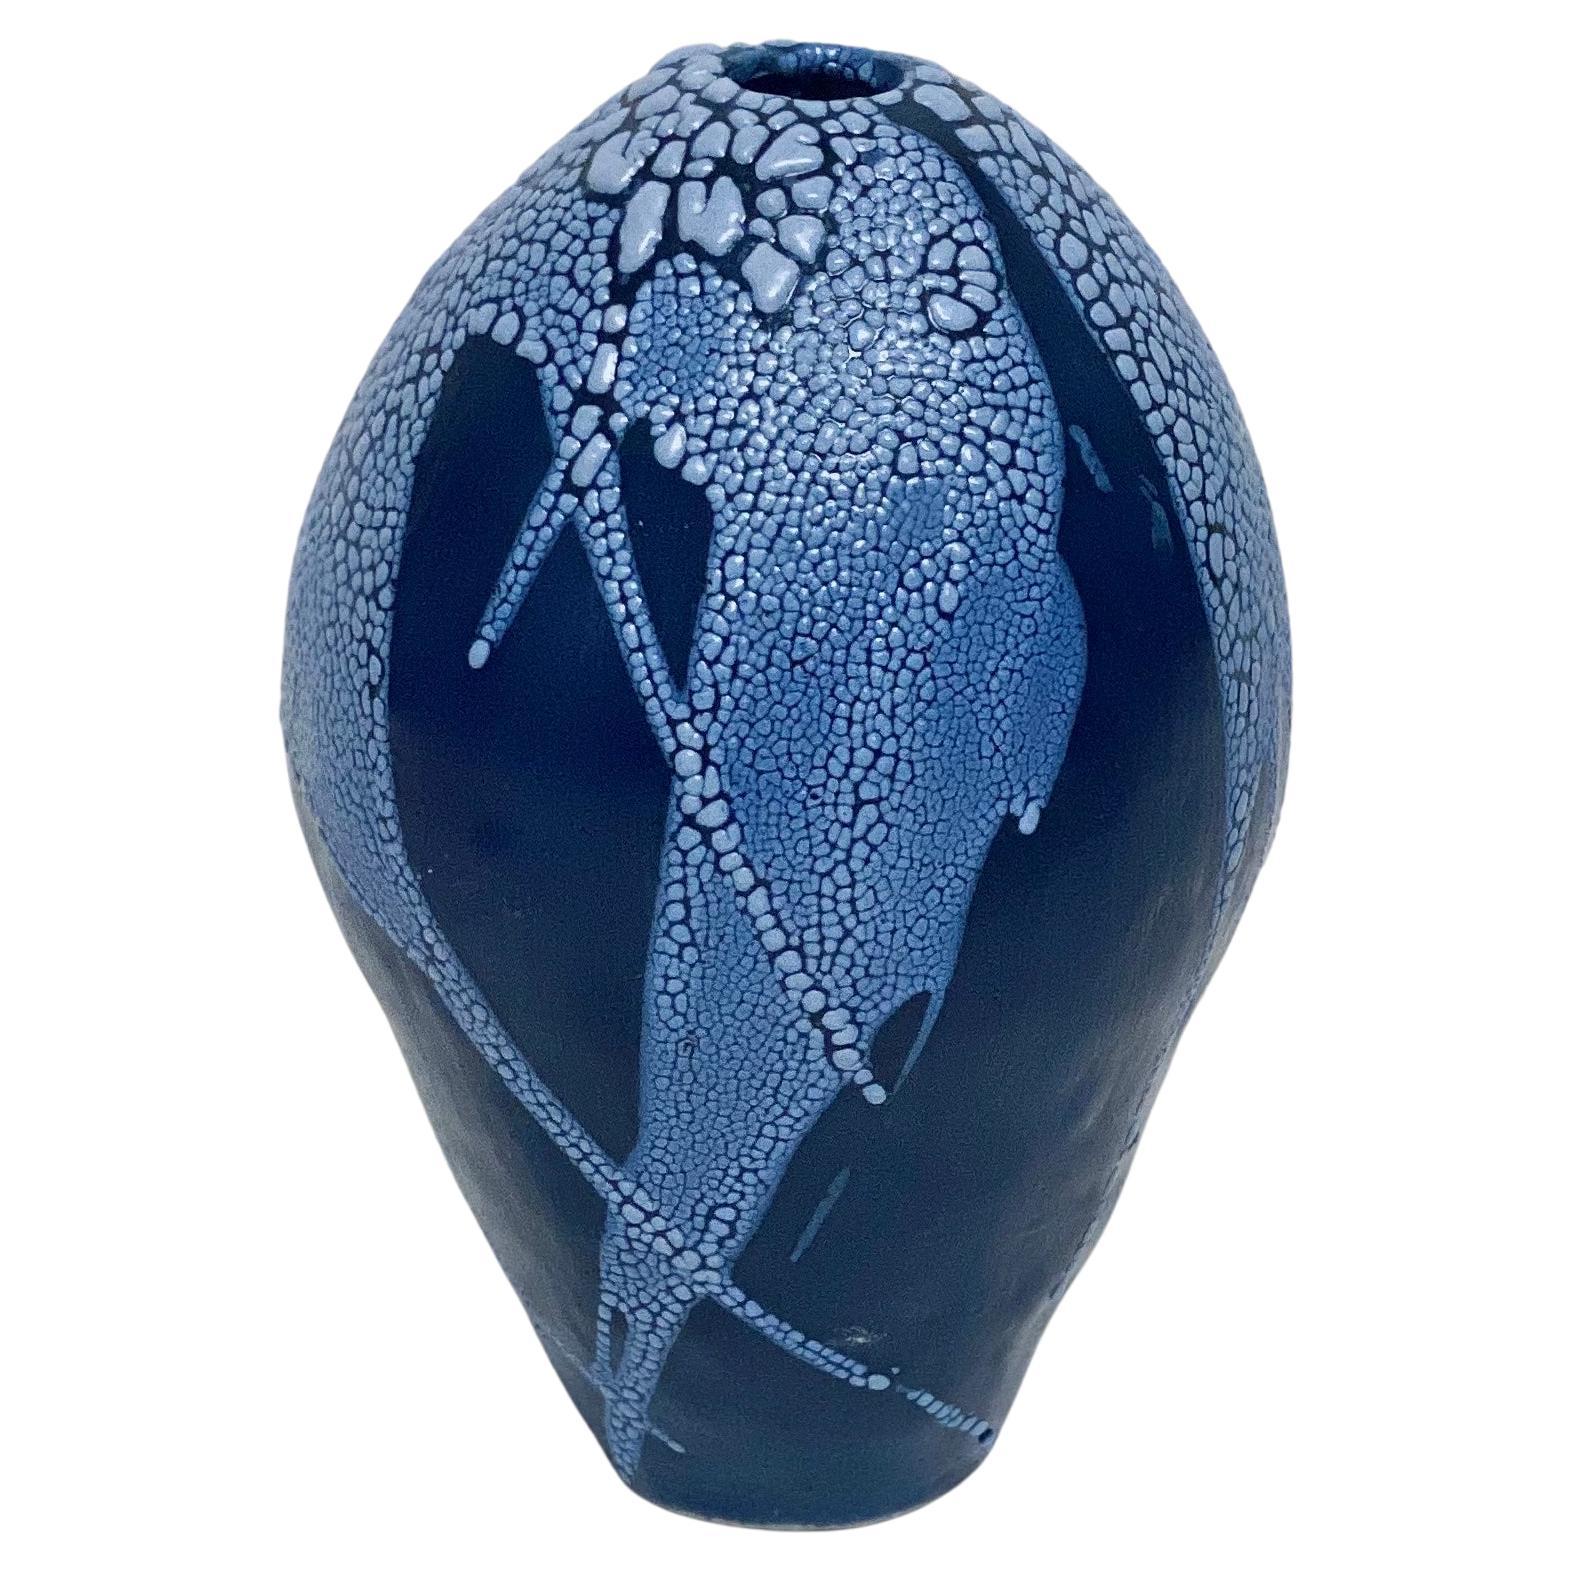 Blue/Blue Dragon Egg Vase by Astrid Öhman